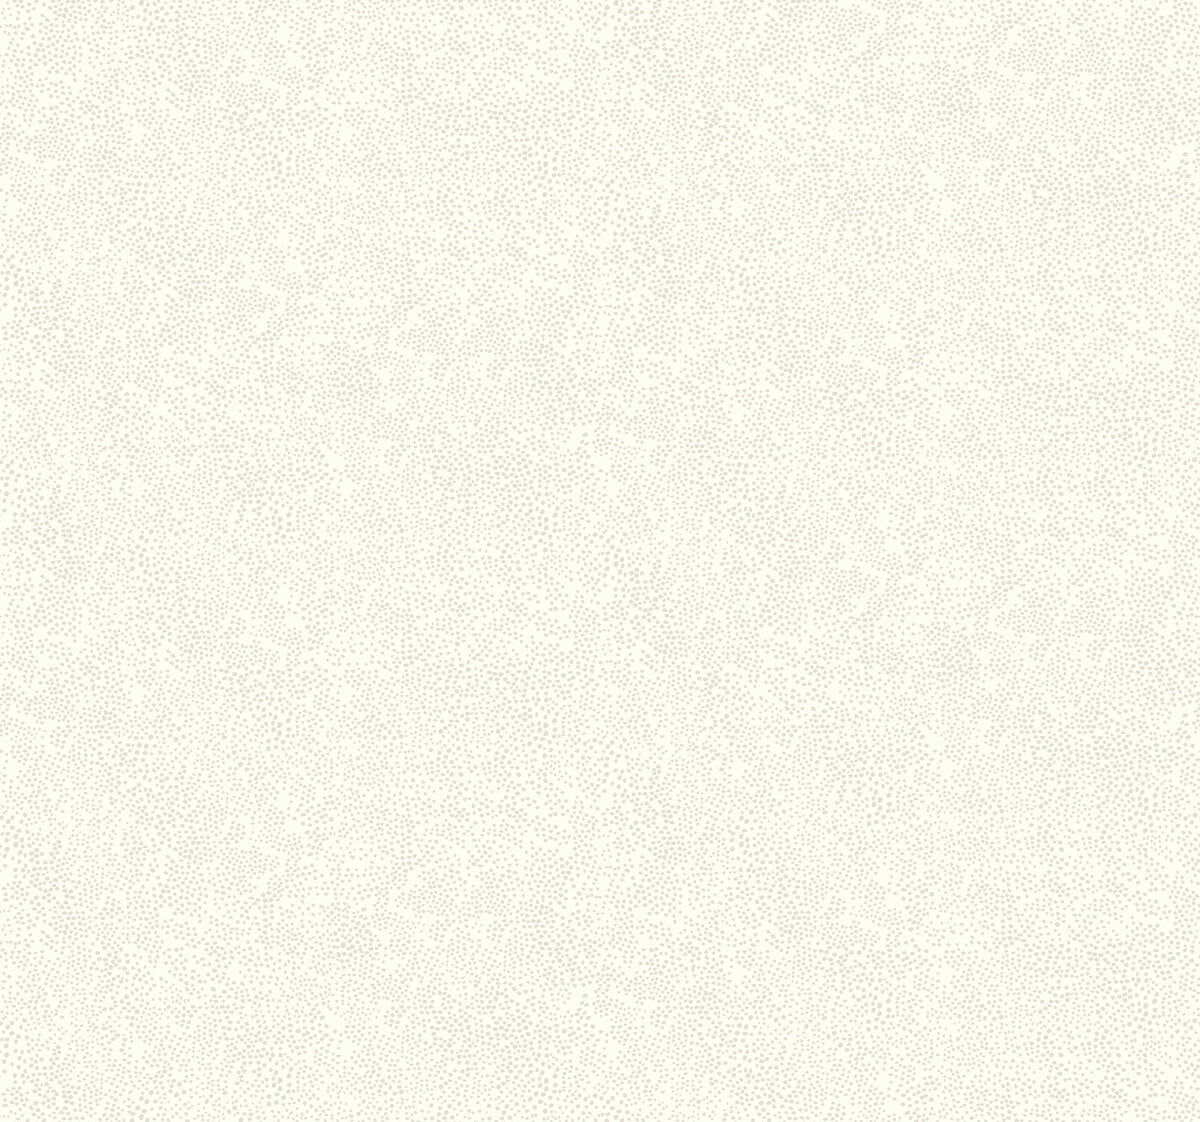 Rifle Paper Co. Champagne Dots Wallpaper - Linen